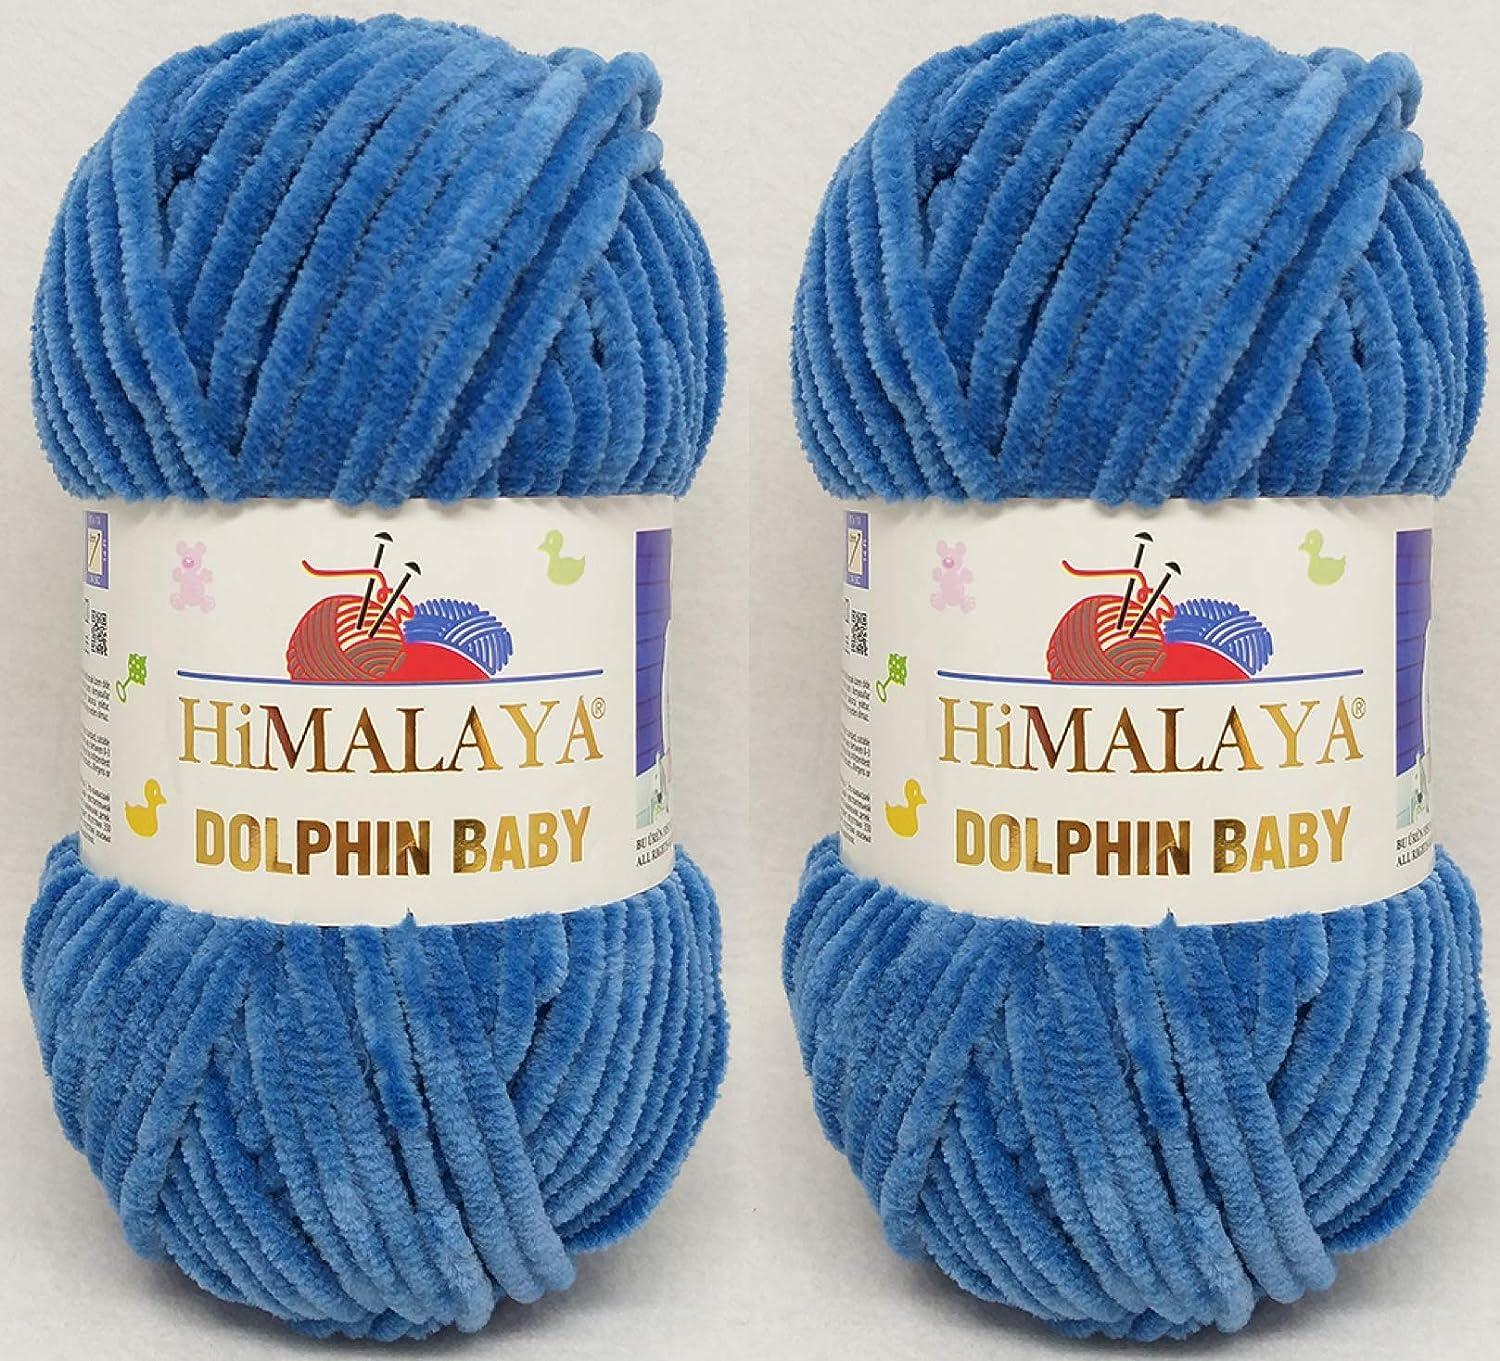 Dolphin Baby micro polyester knitting yarn - Himalaya - 1, 100 g